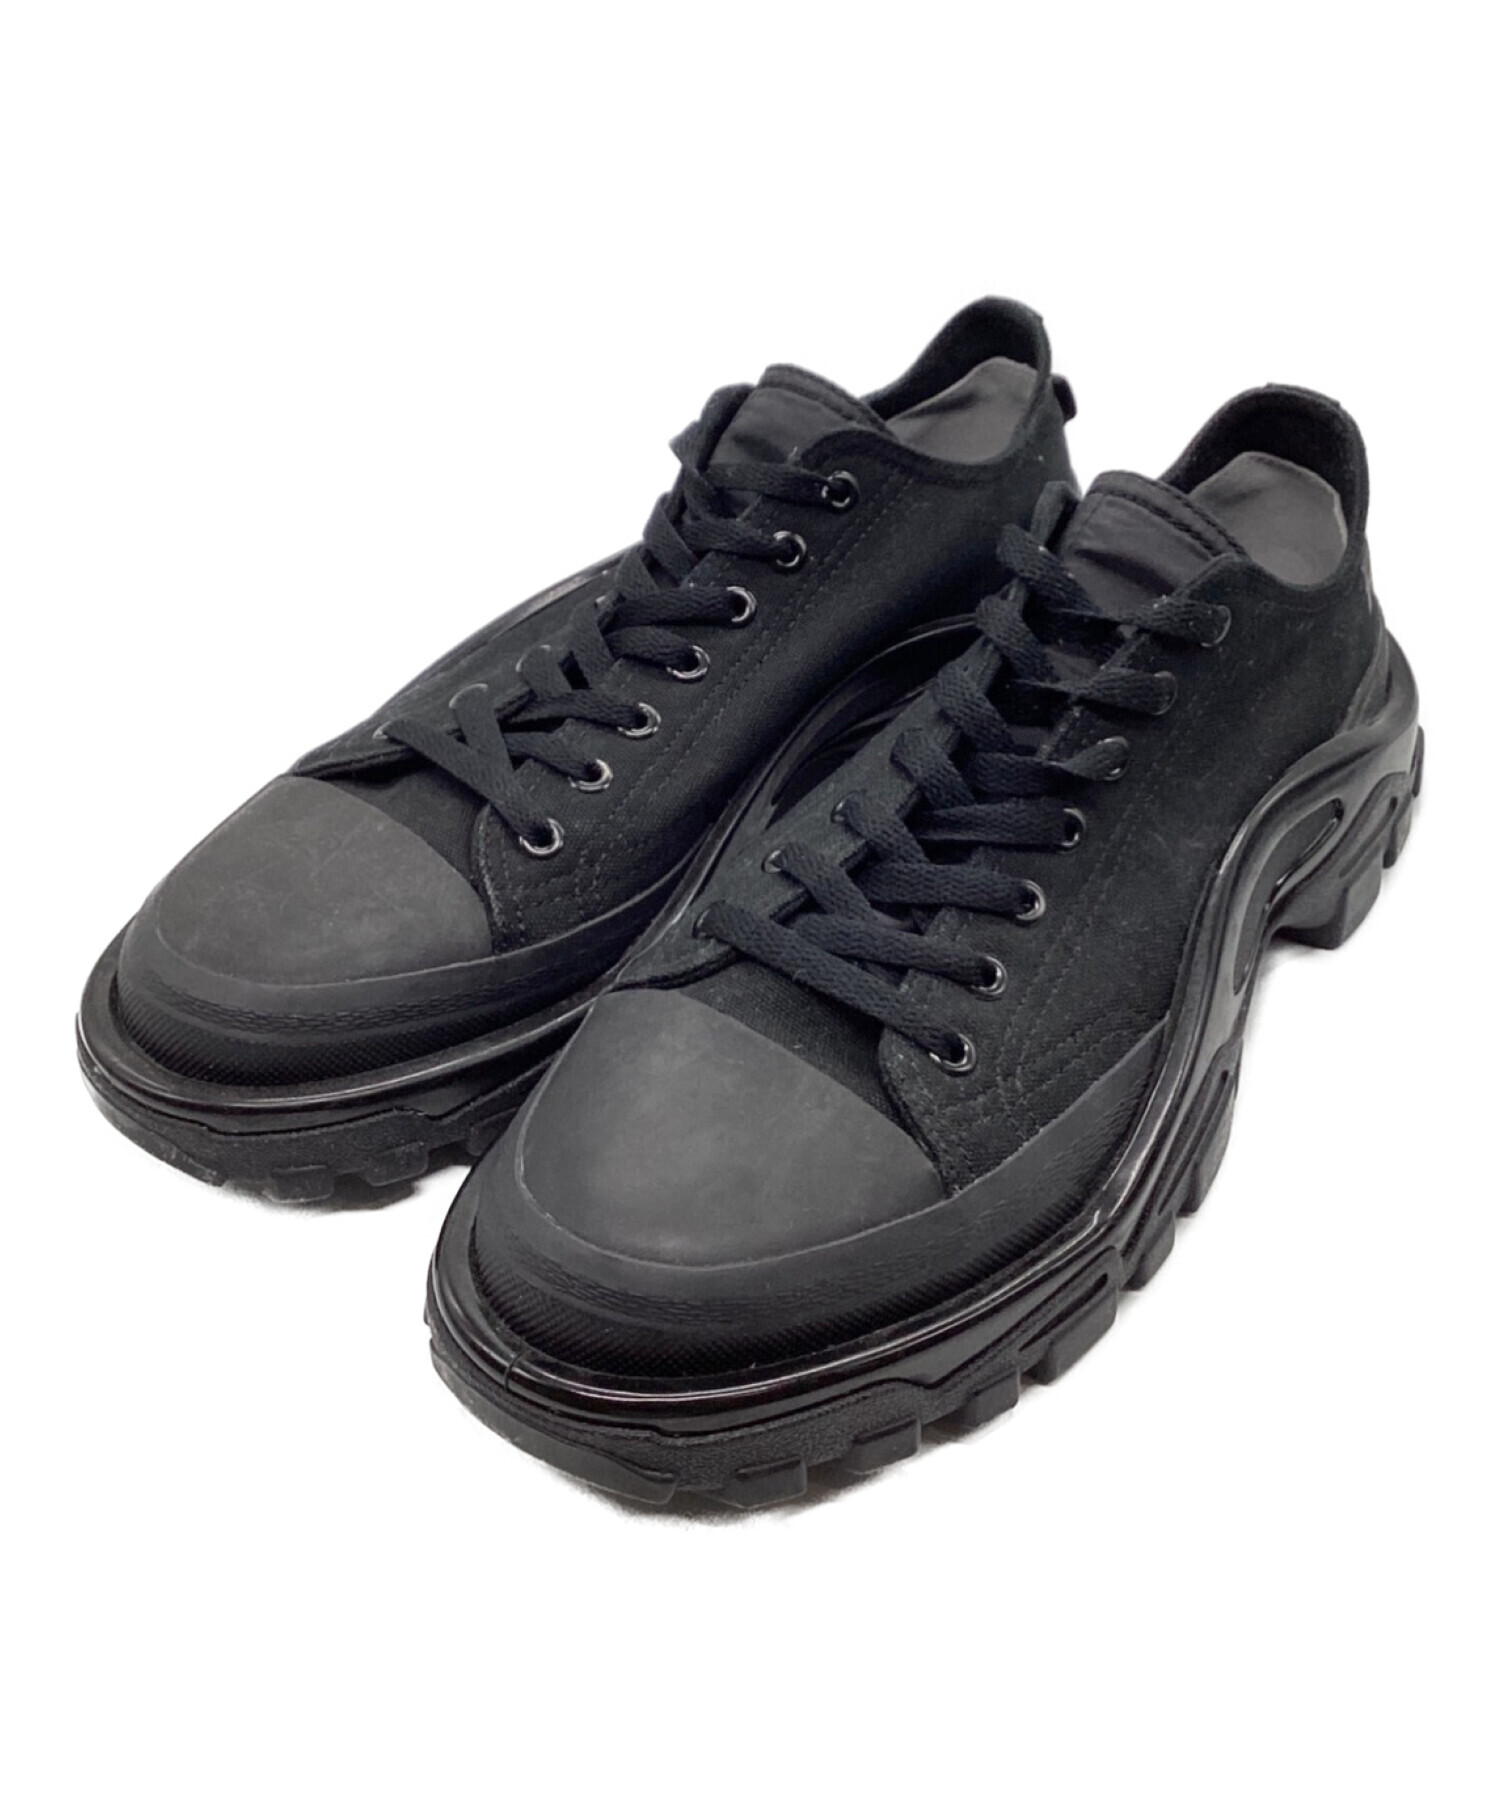 RAF SIMONS Black sneakers